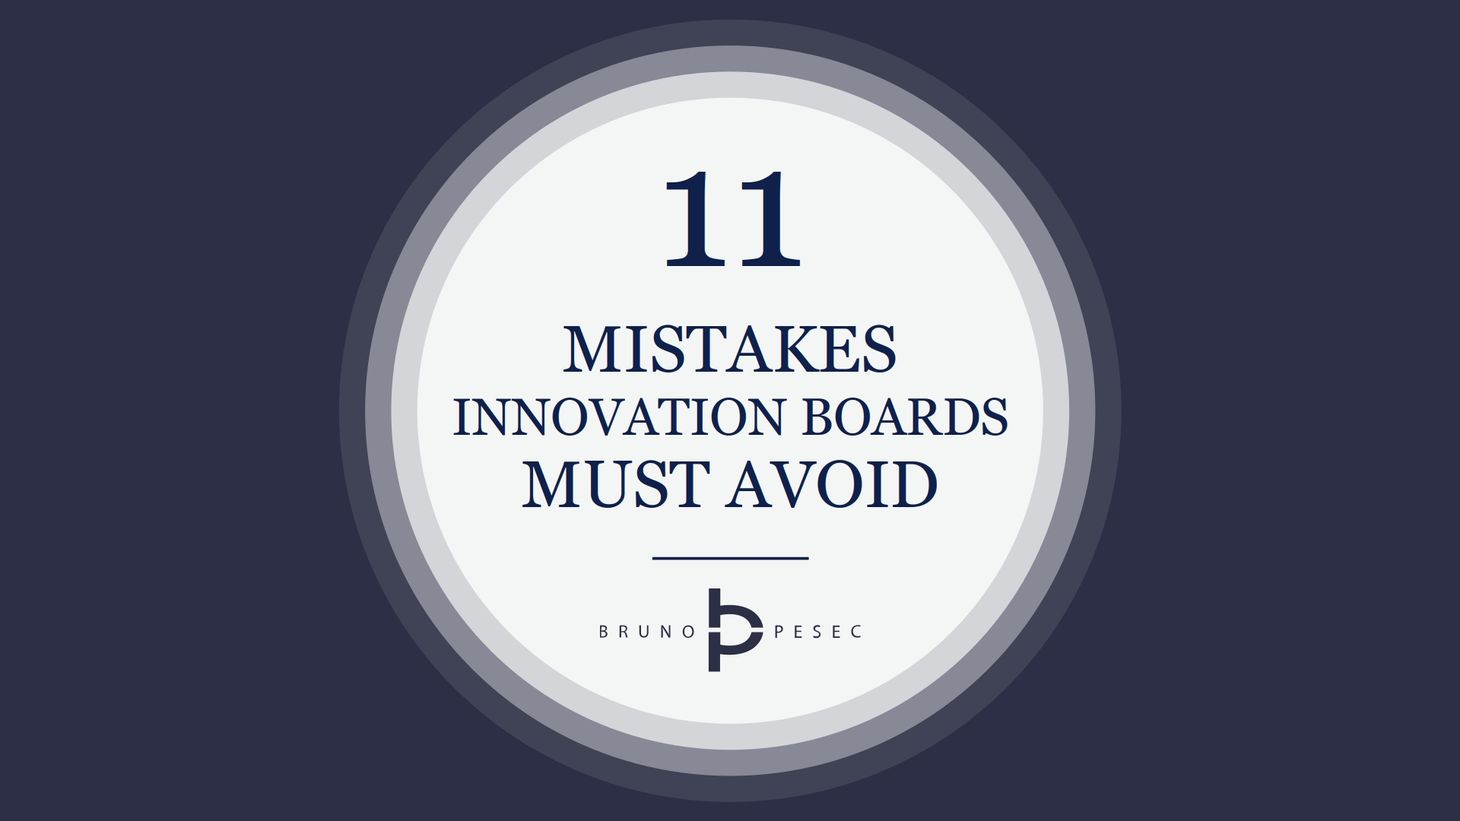 11 mistakes innovation boards must avoid